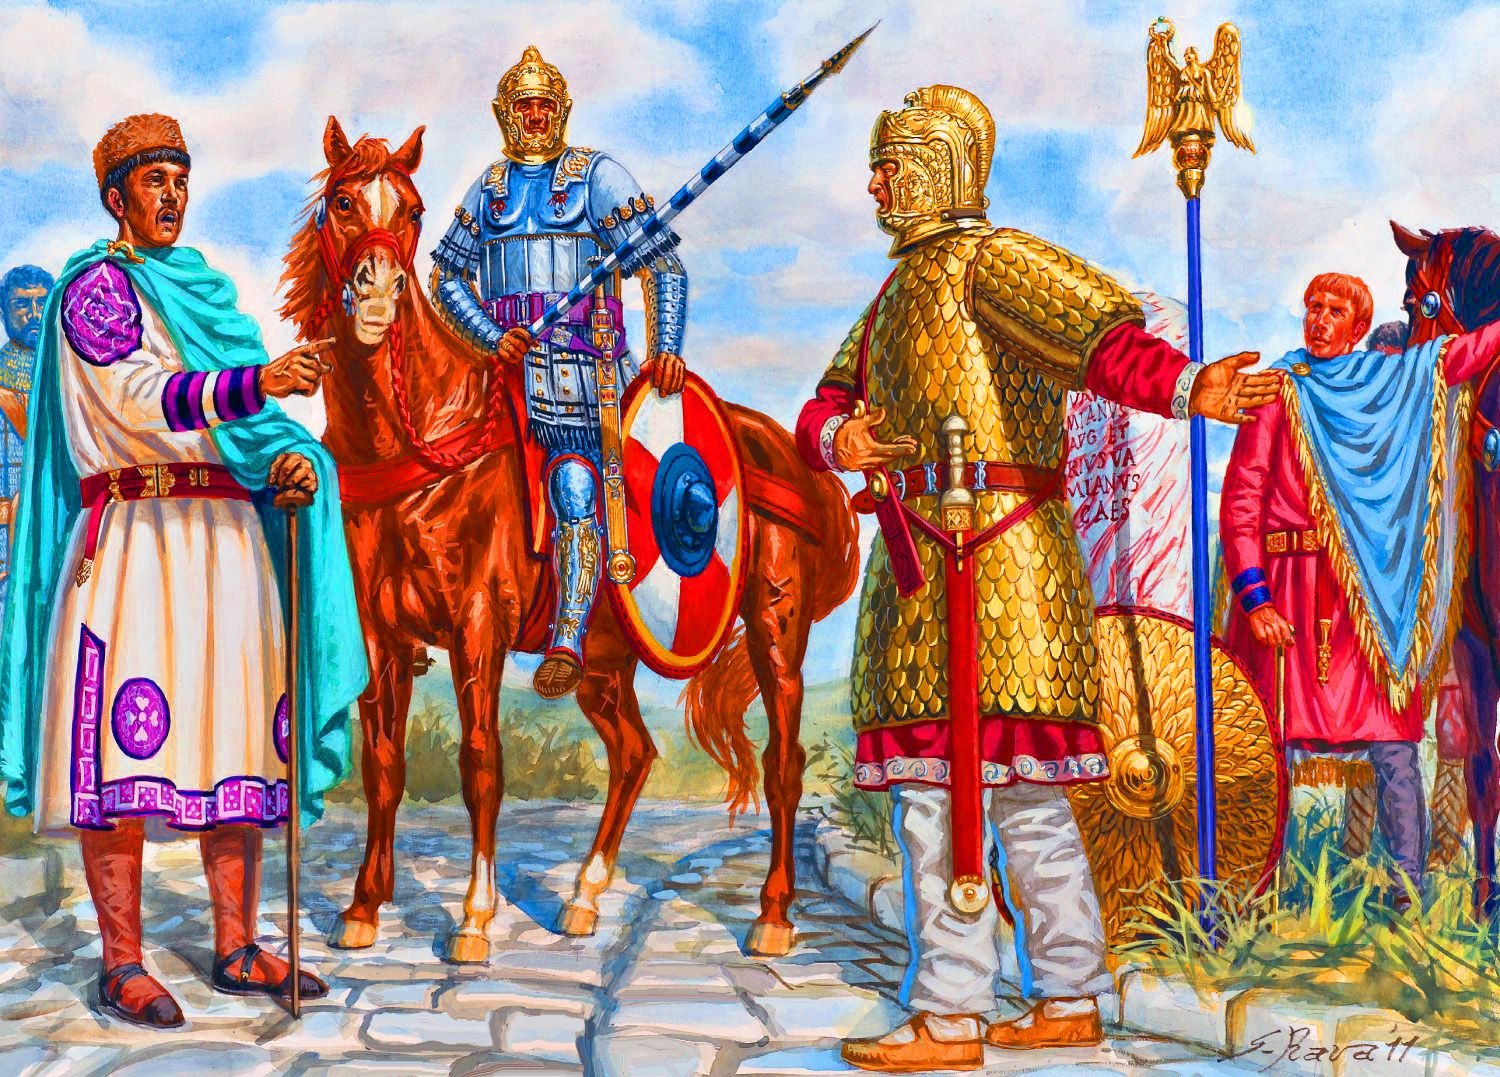 Century ad. Византийская армия 5 век. Римская армия 4-5 век. Римская армия 5 век. Солдаты Византийской империи 1453.